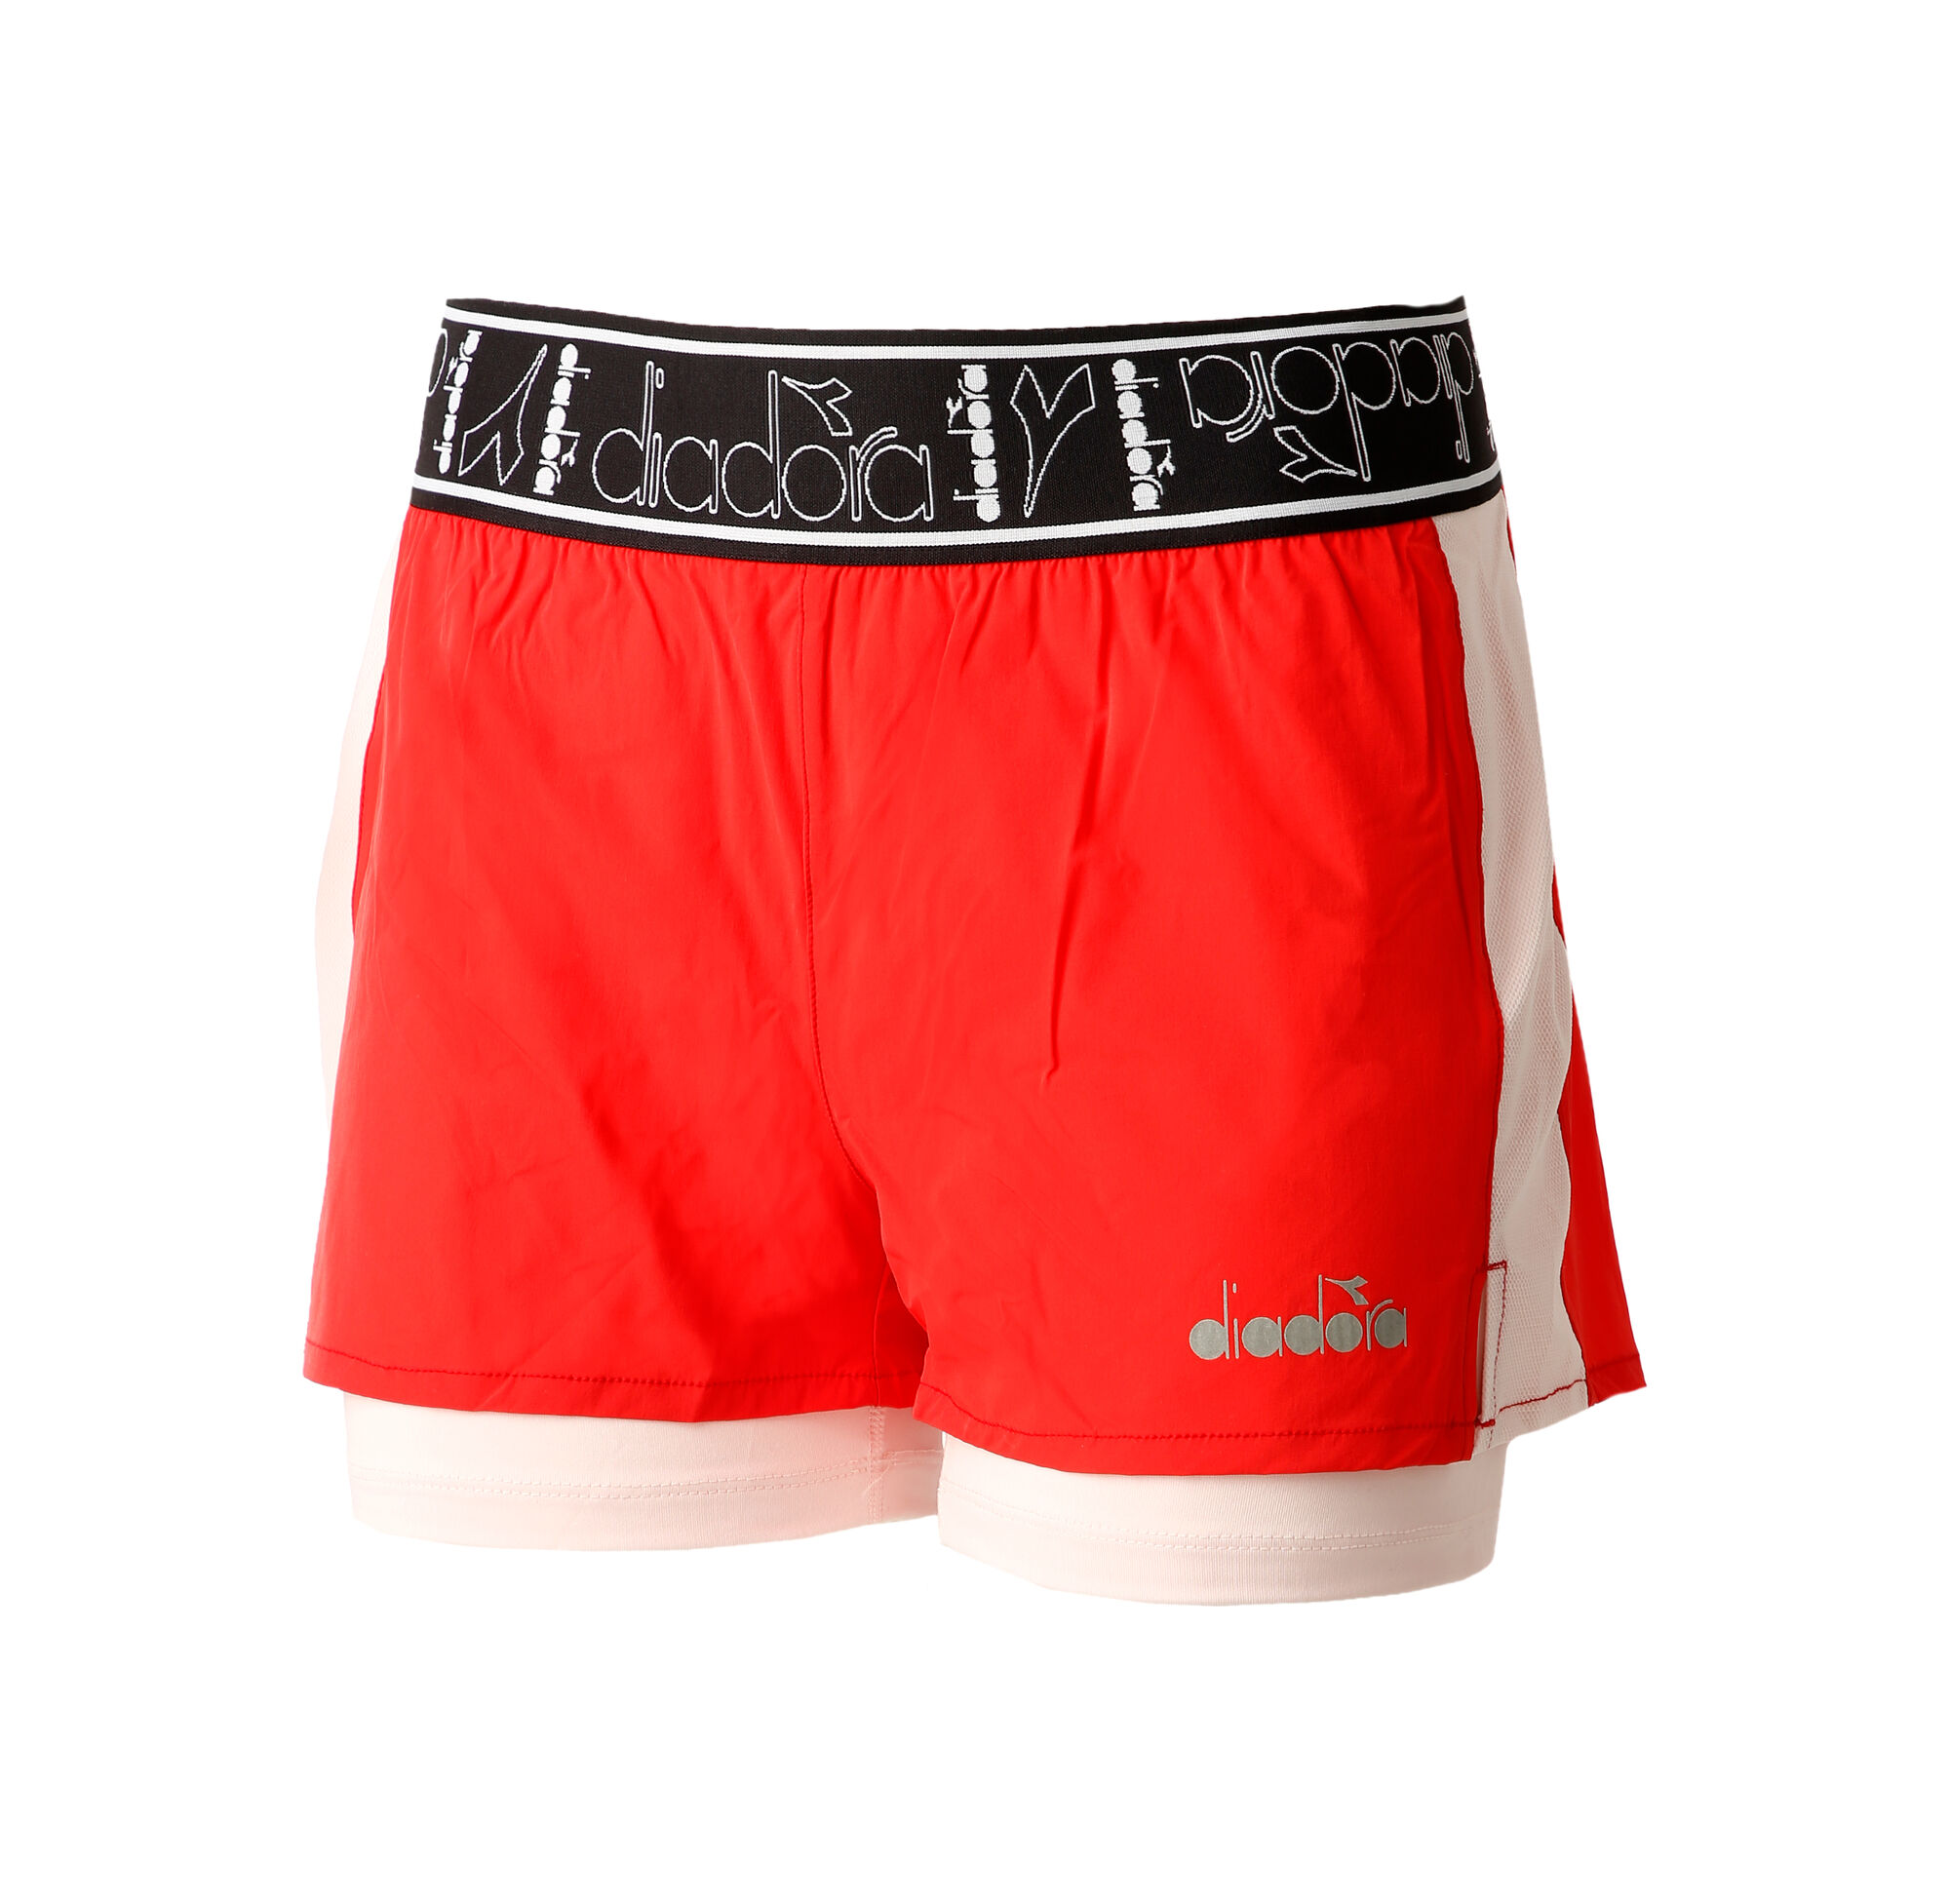 buy Diadora Double Layer Shorts Women - Coral, Black online | Tennis-Point